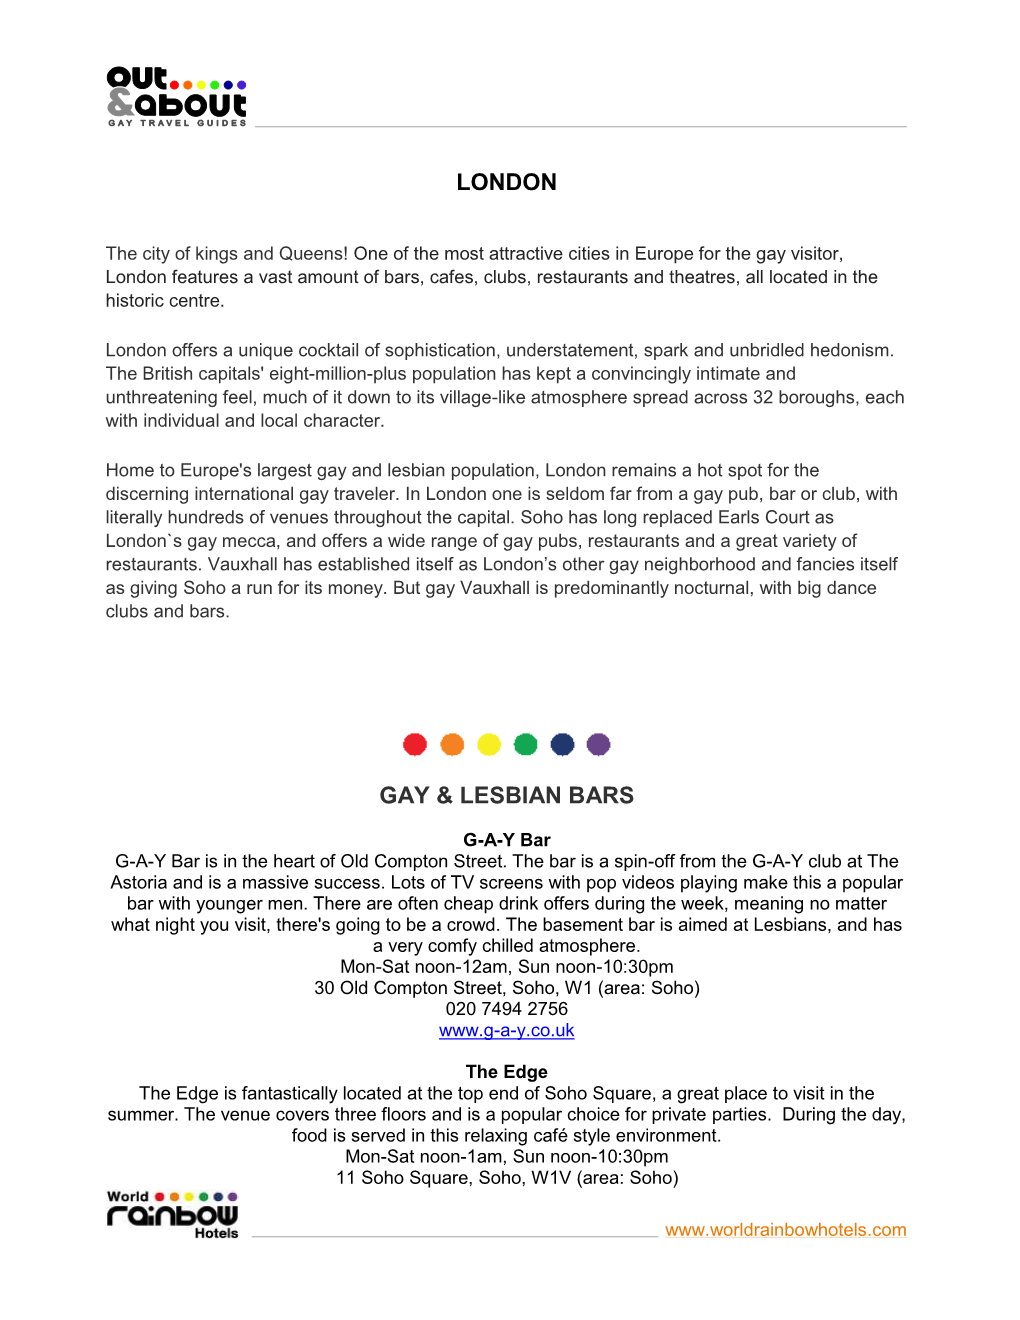 London Gay & Lesbian Bars